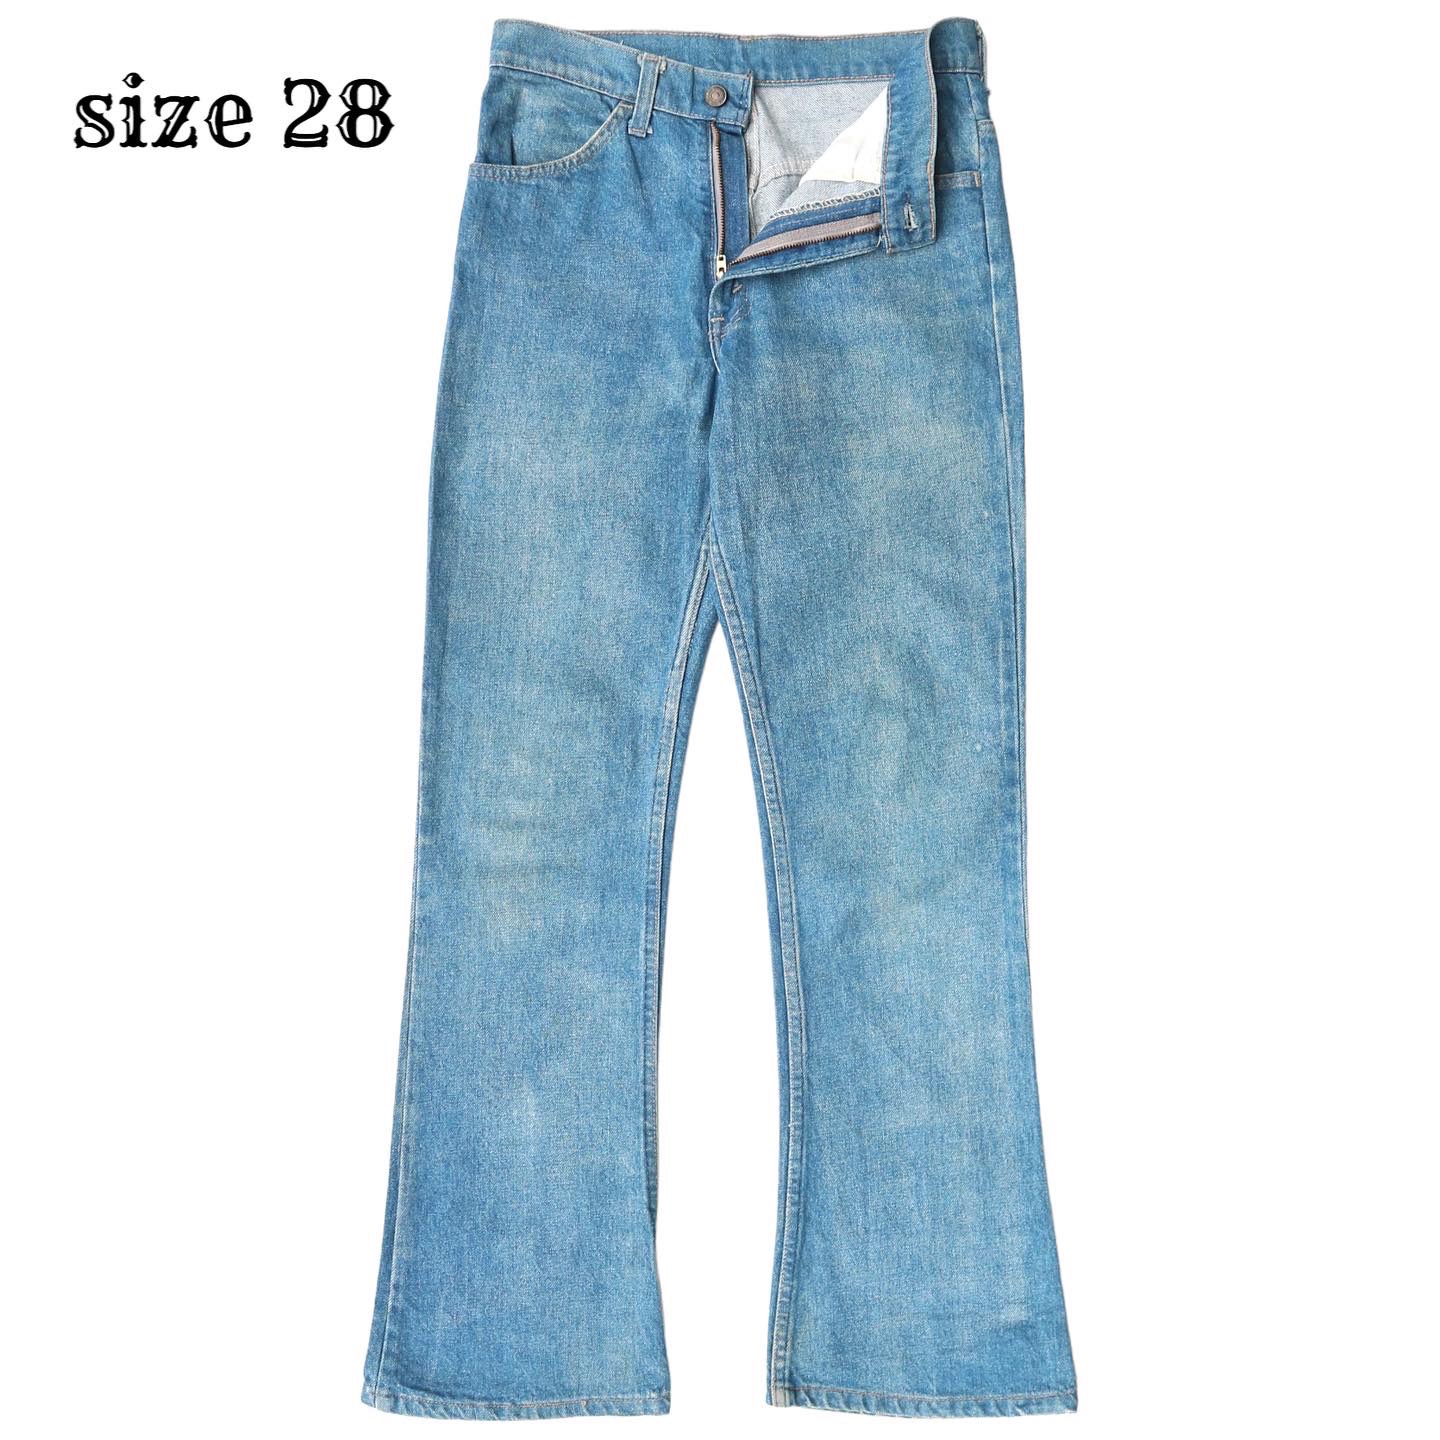 Vintage 80s Levi's 646 Jeans Size 28 denimister